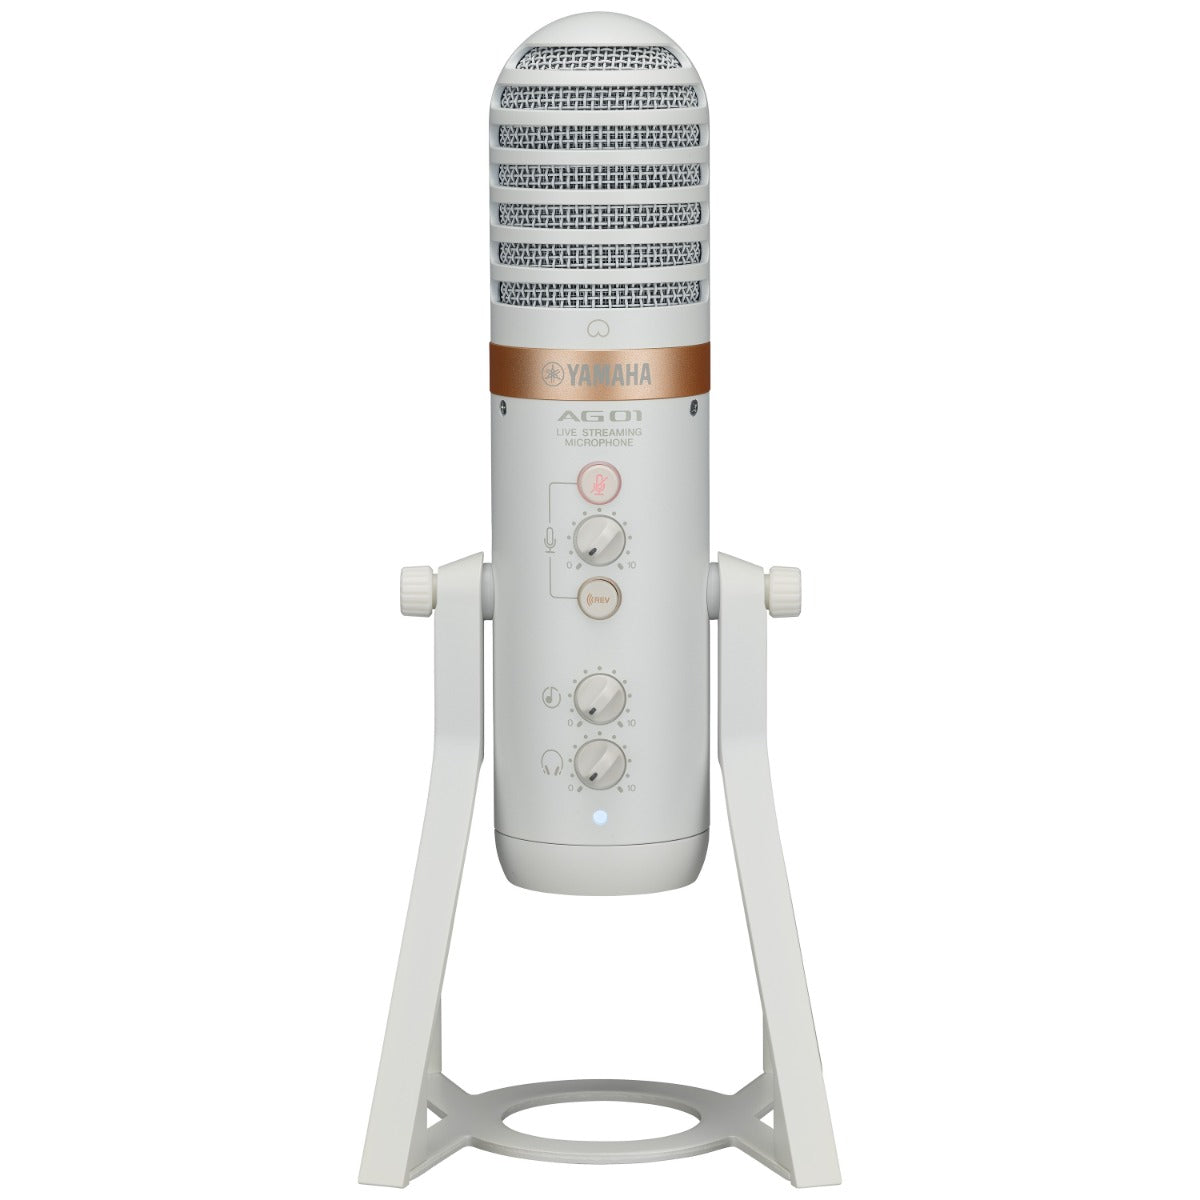 Yamaha AG01 Live Streaming USB Microphone - White view 2